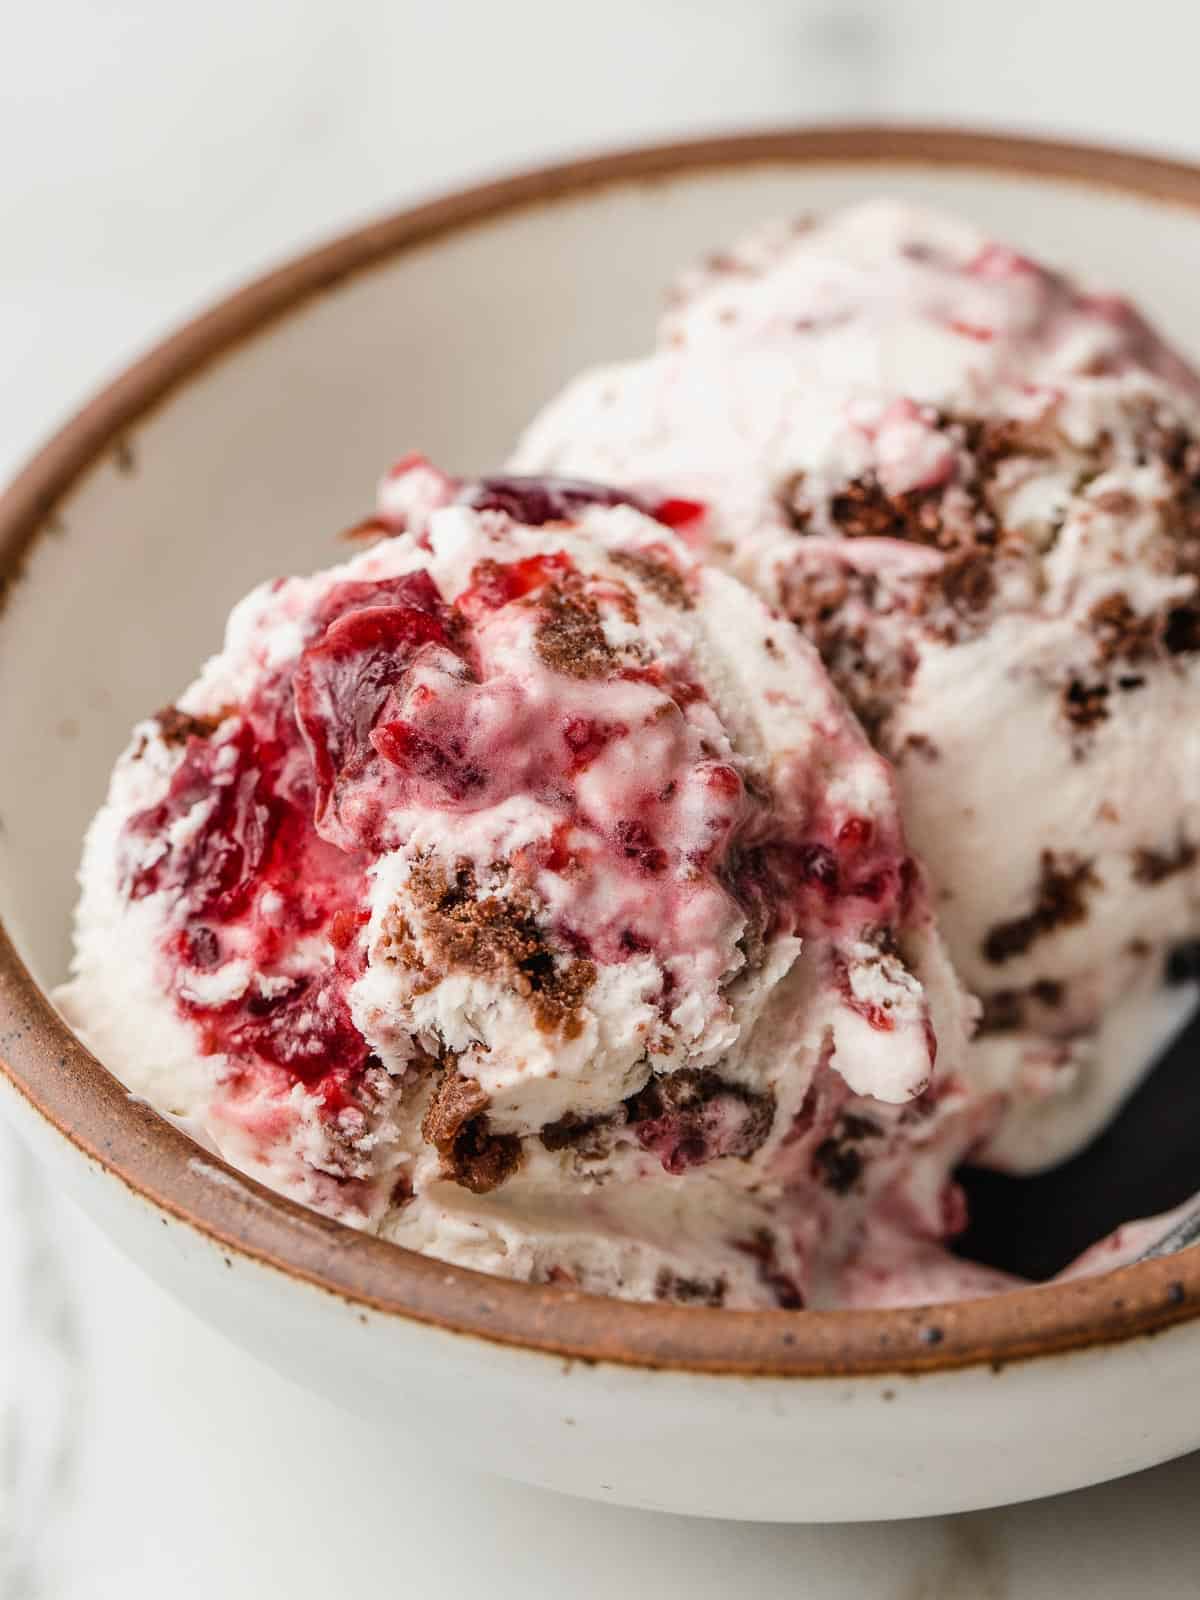 Chocolate cherry swirl ice cream in a bowl.